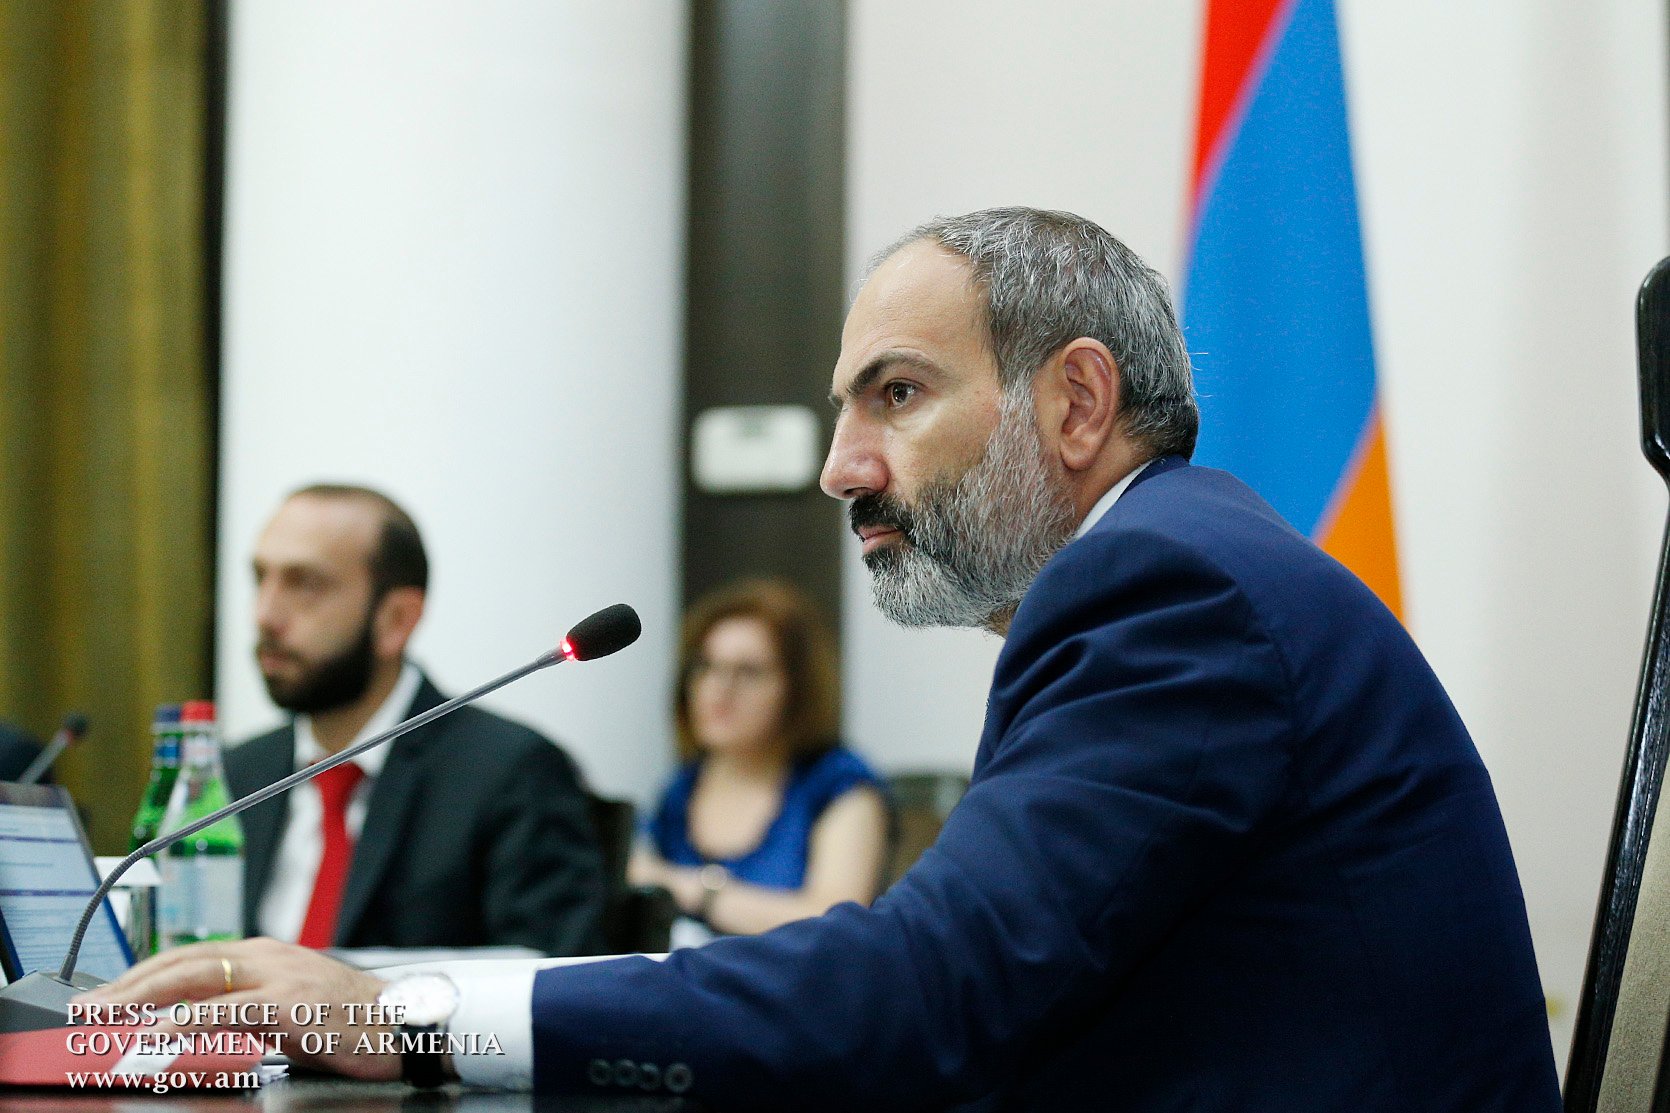 Economic Activity Index in Armenia Steadily Increasing